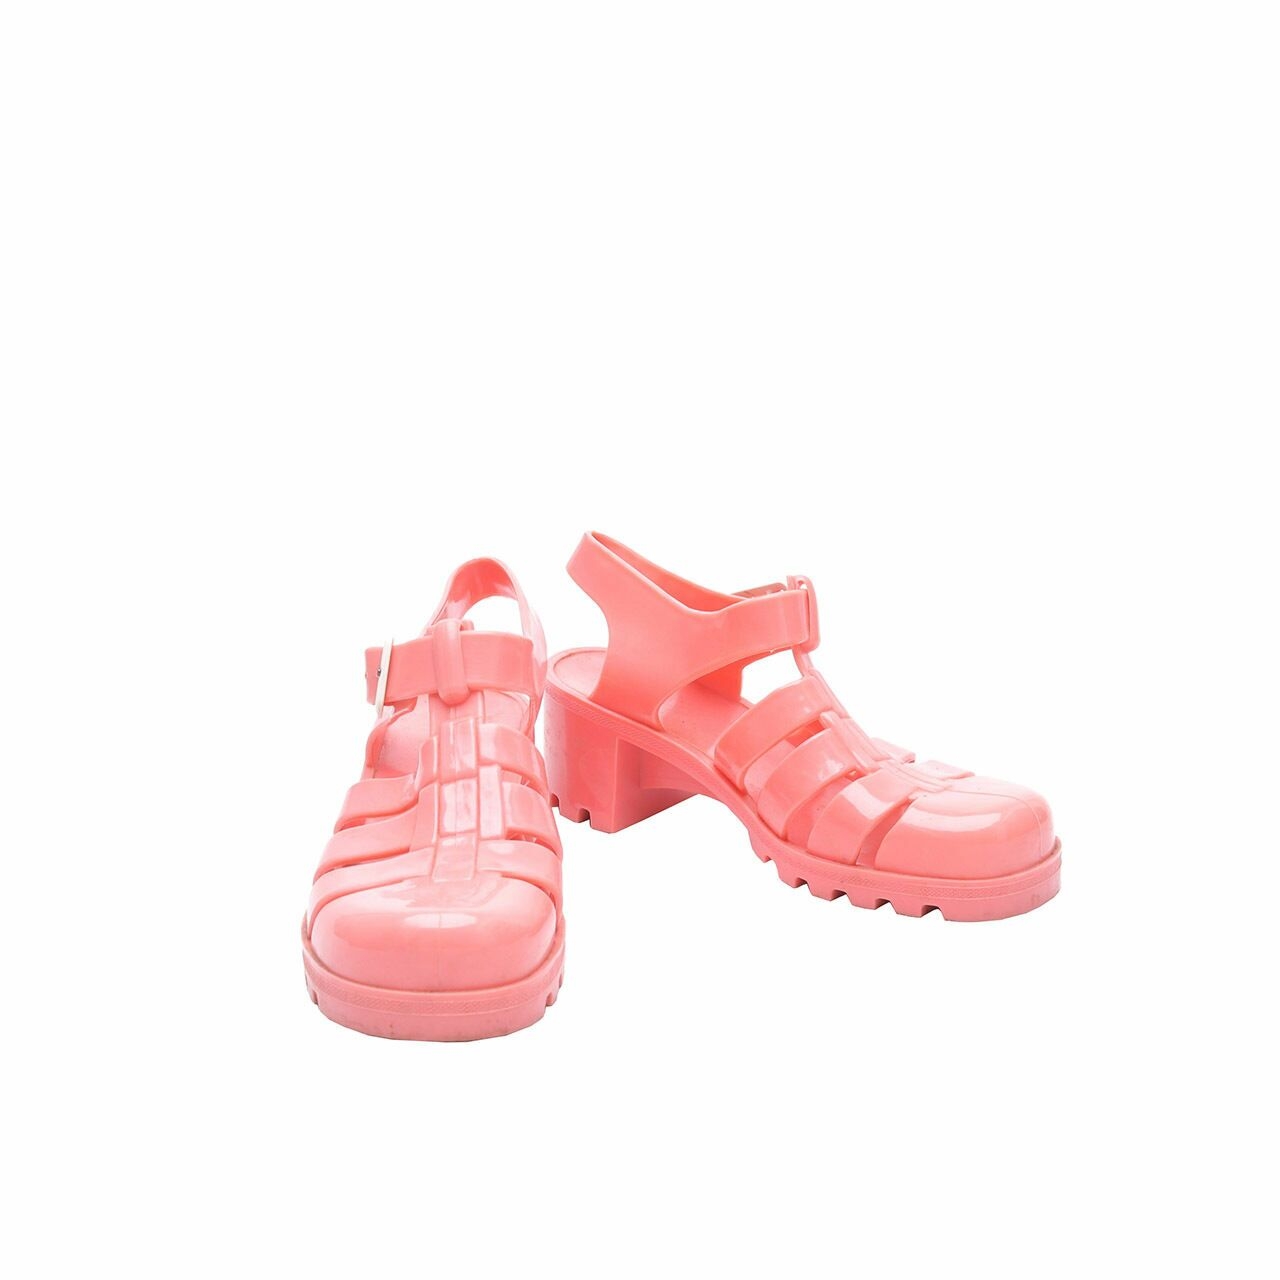 Juju Pink Strap Sandals